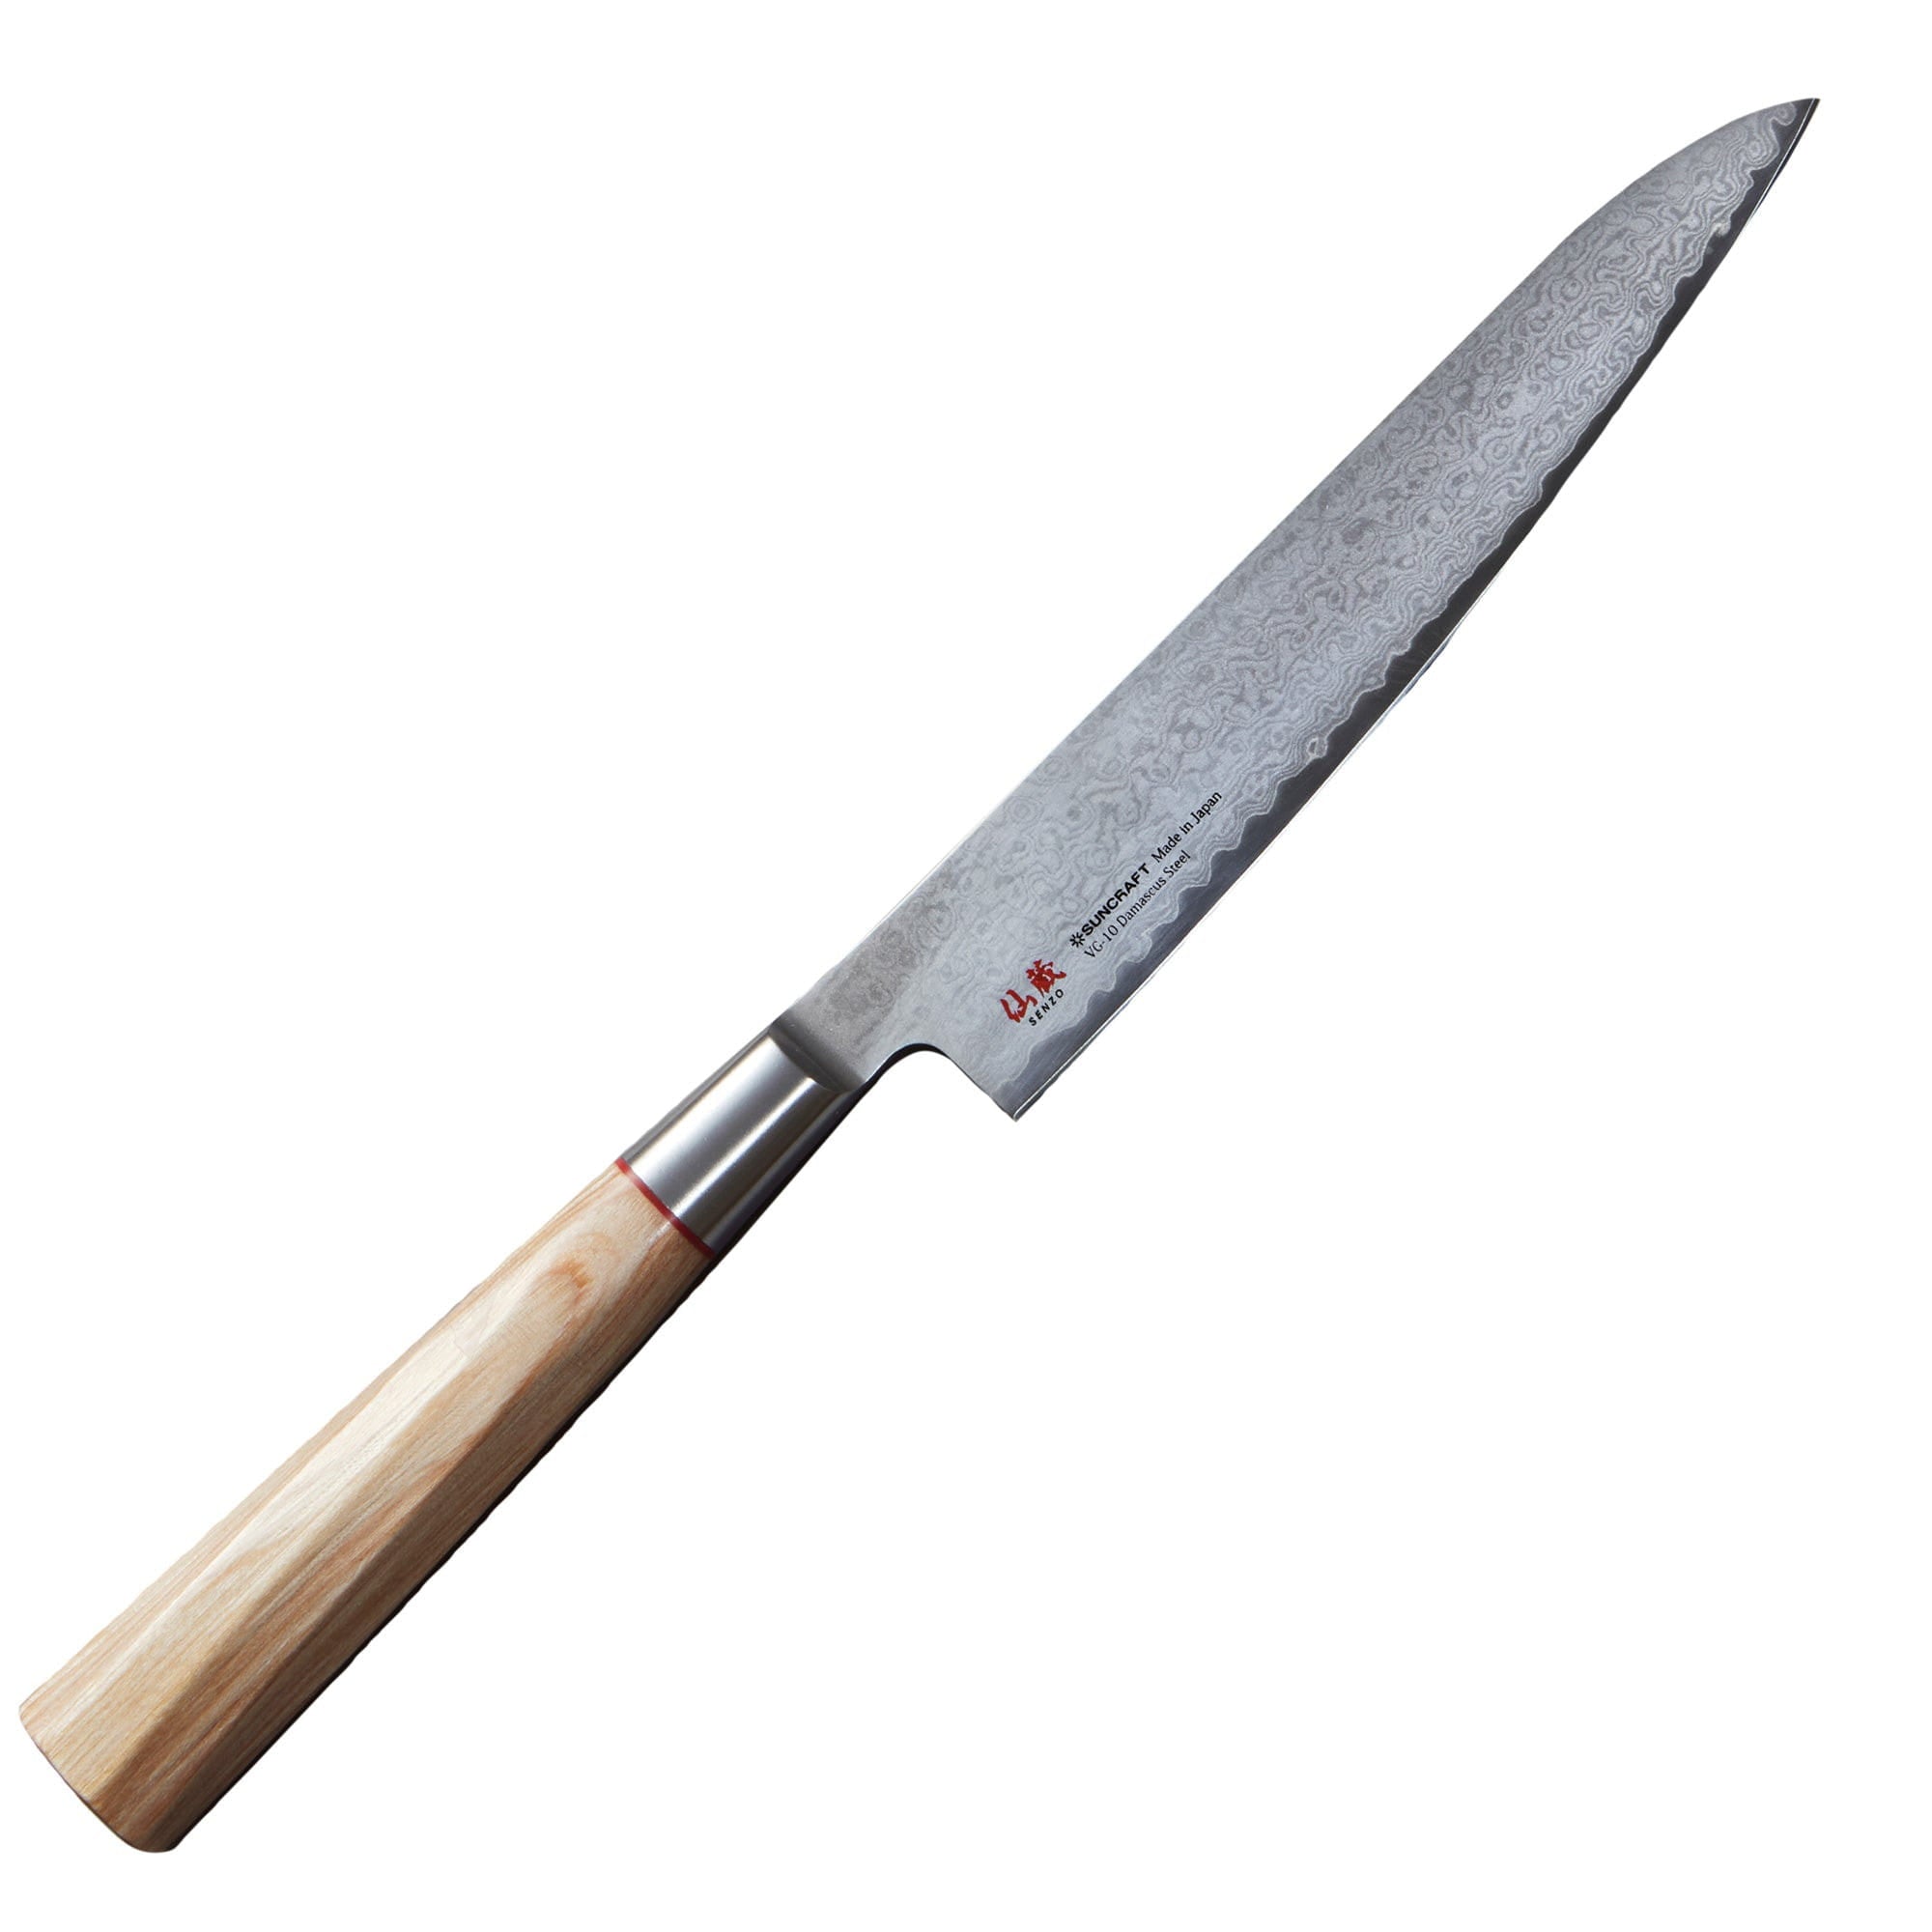 Senzo To 02 Universal Knife, 15 Cm